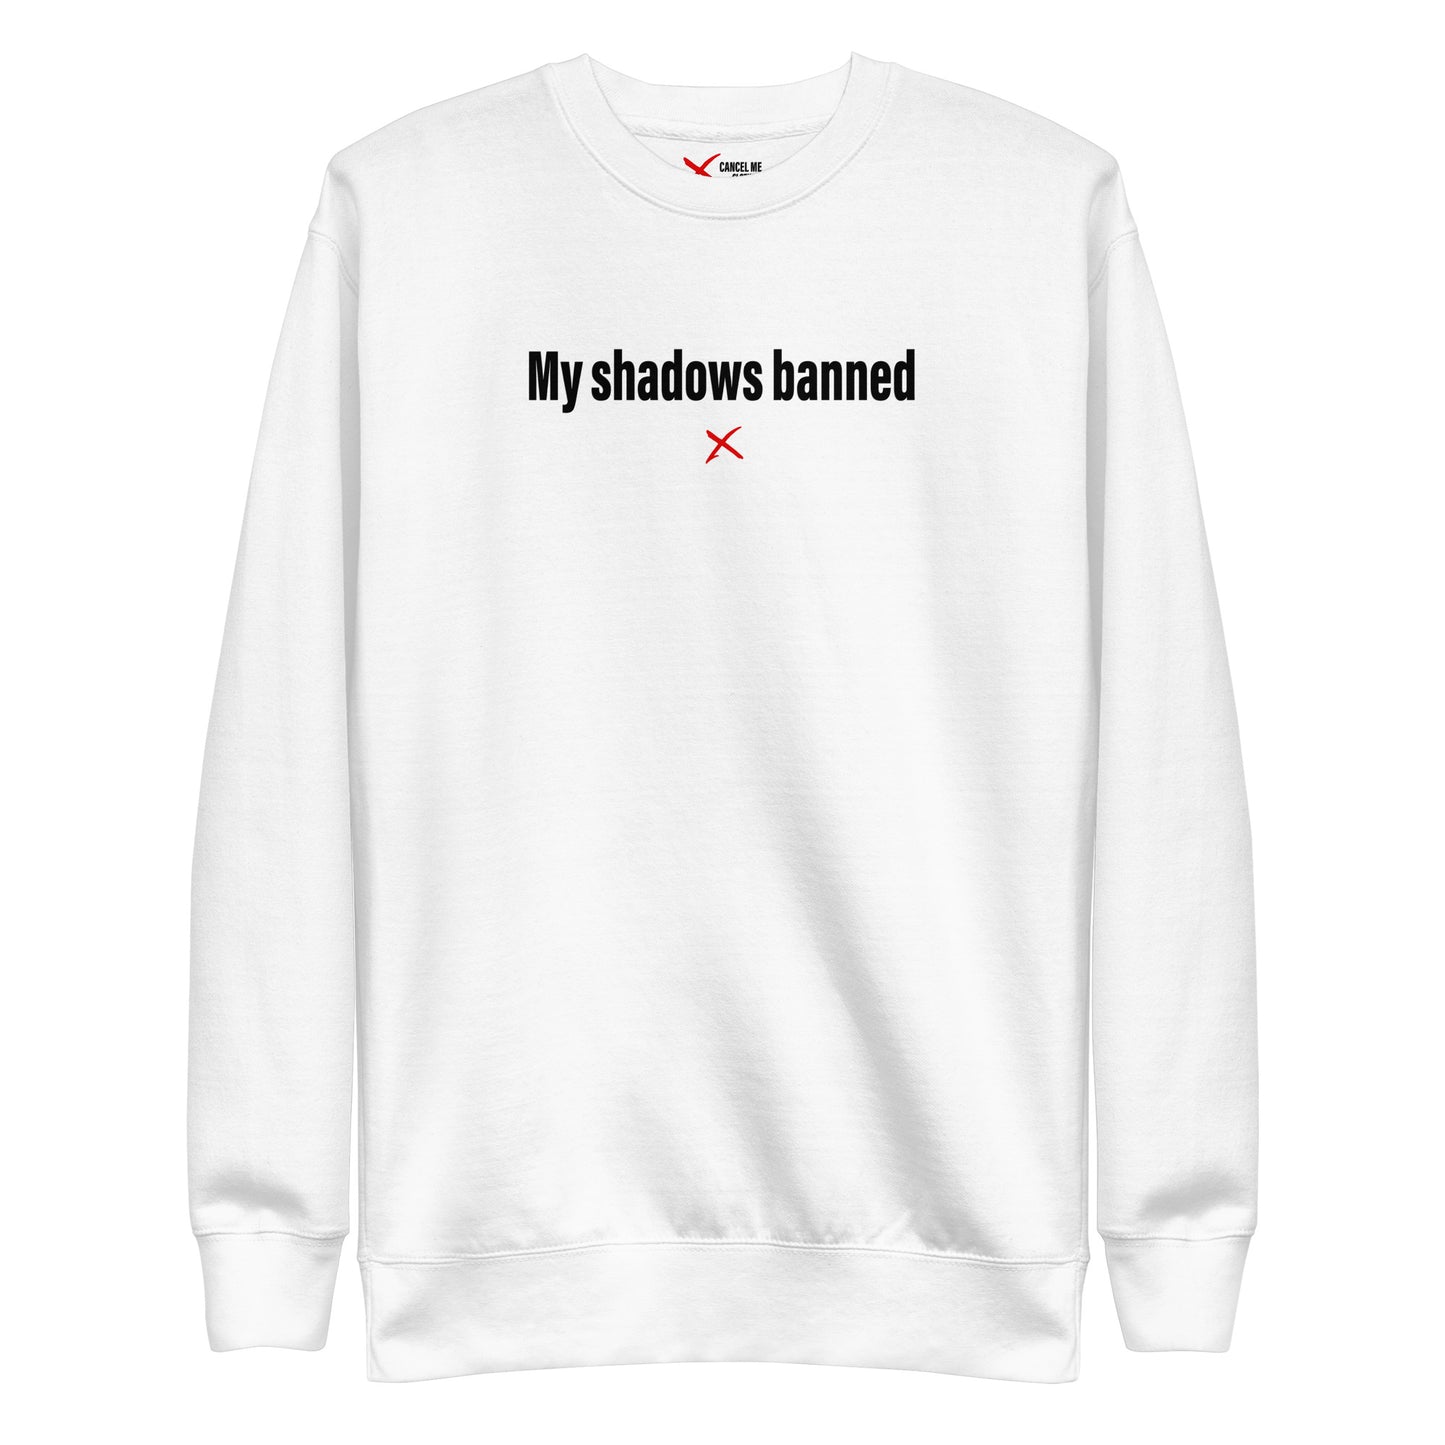 My shadows banned - Sweatshirt